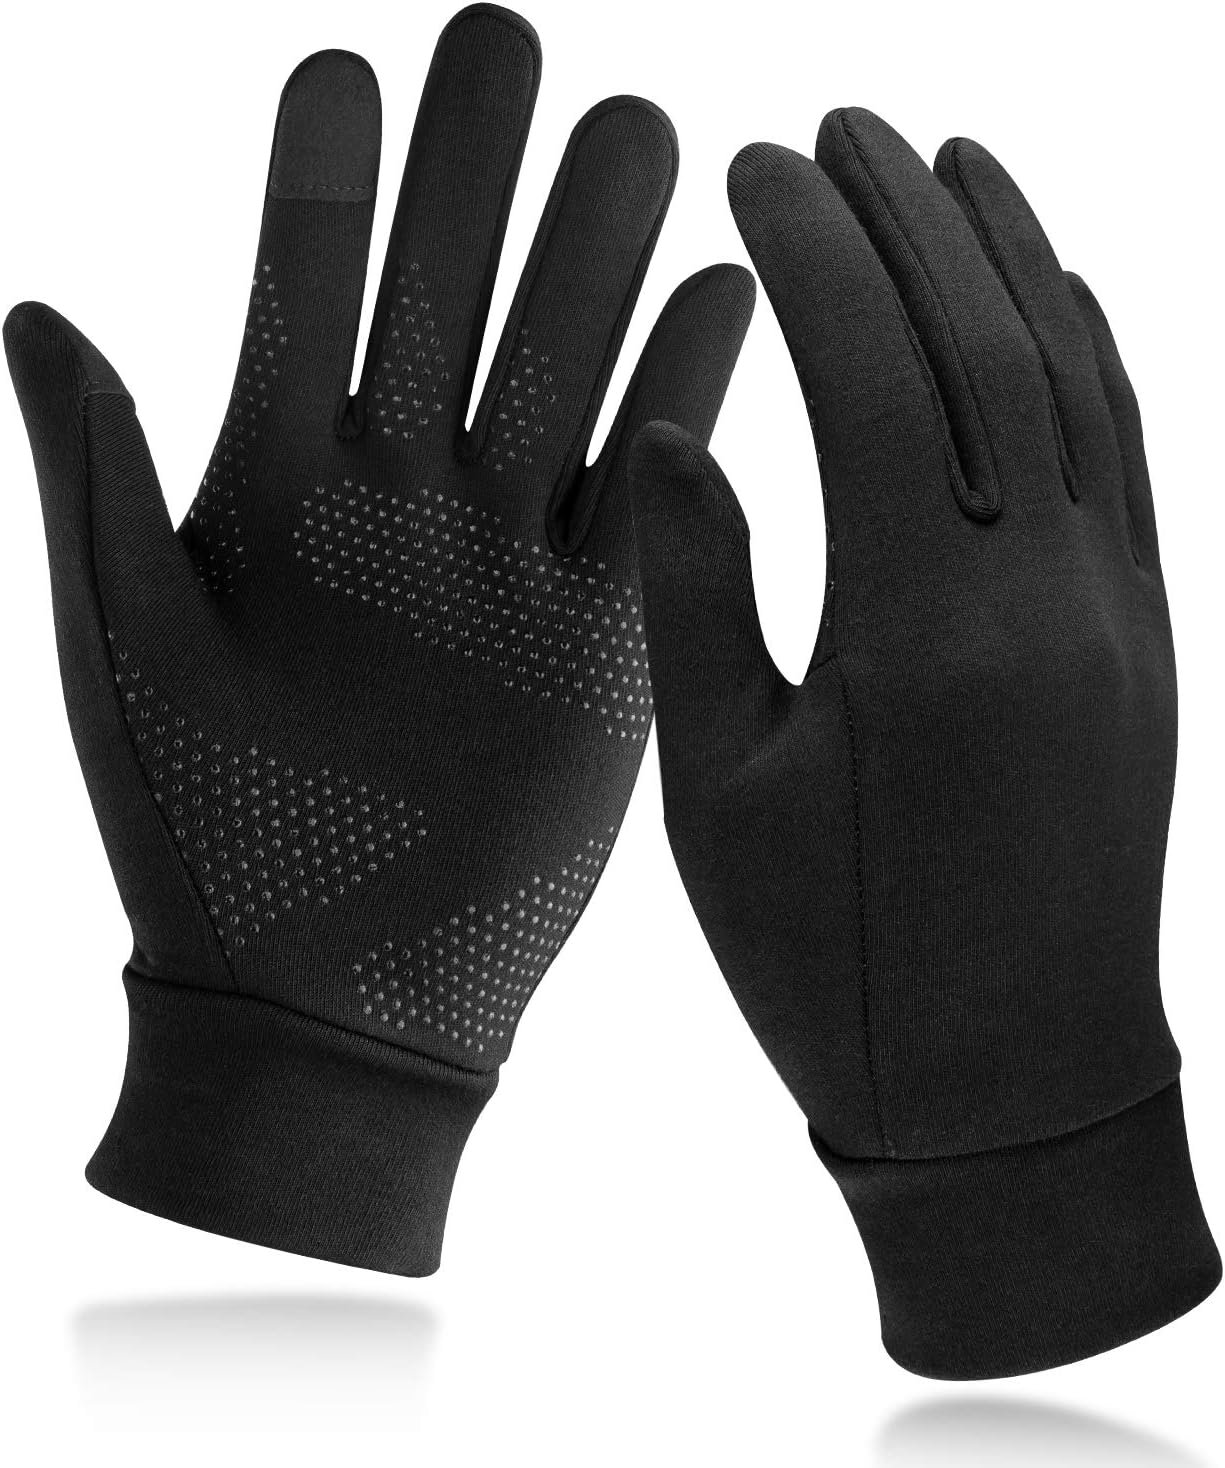 Unigear Lightweight Running Gloves, Touch Screen Anti-Slip Warm Gloves Liners for Cycling Biking Sporting Driving for Men Women